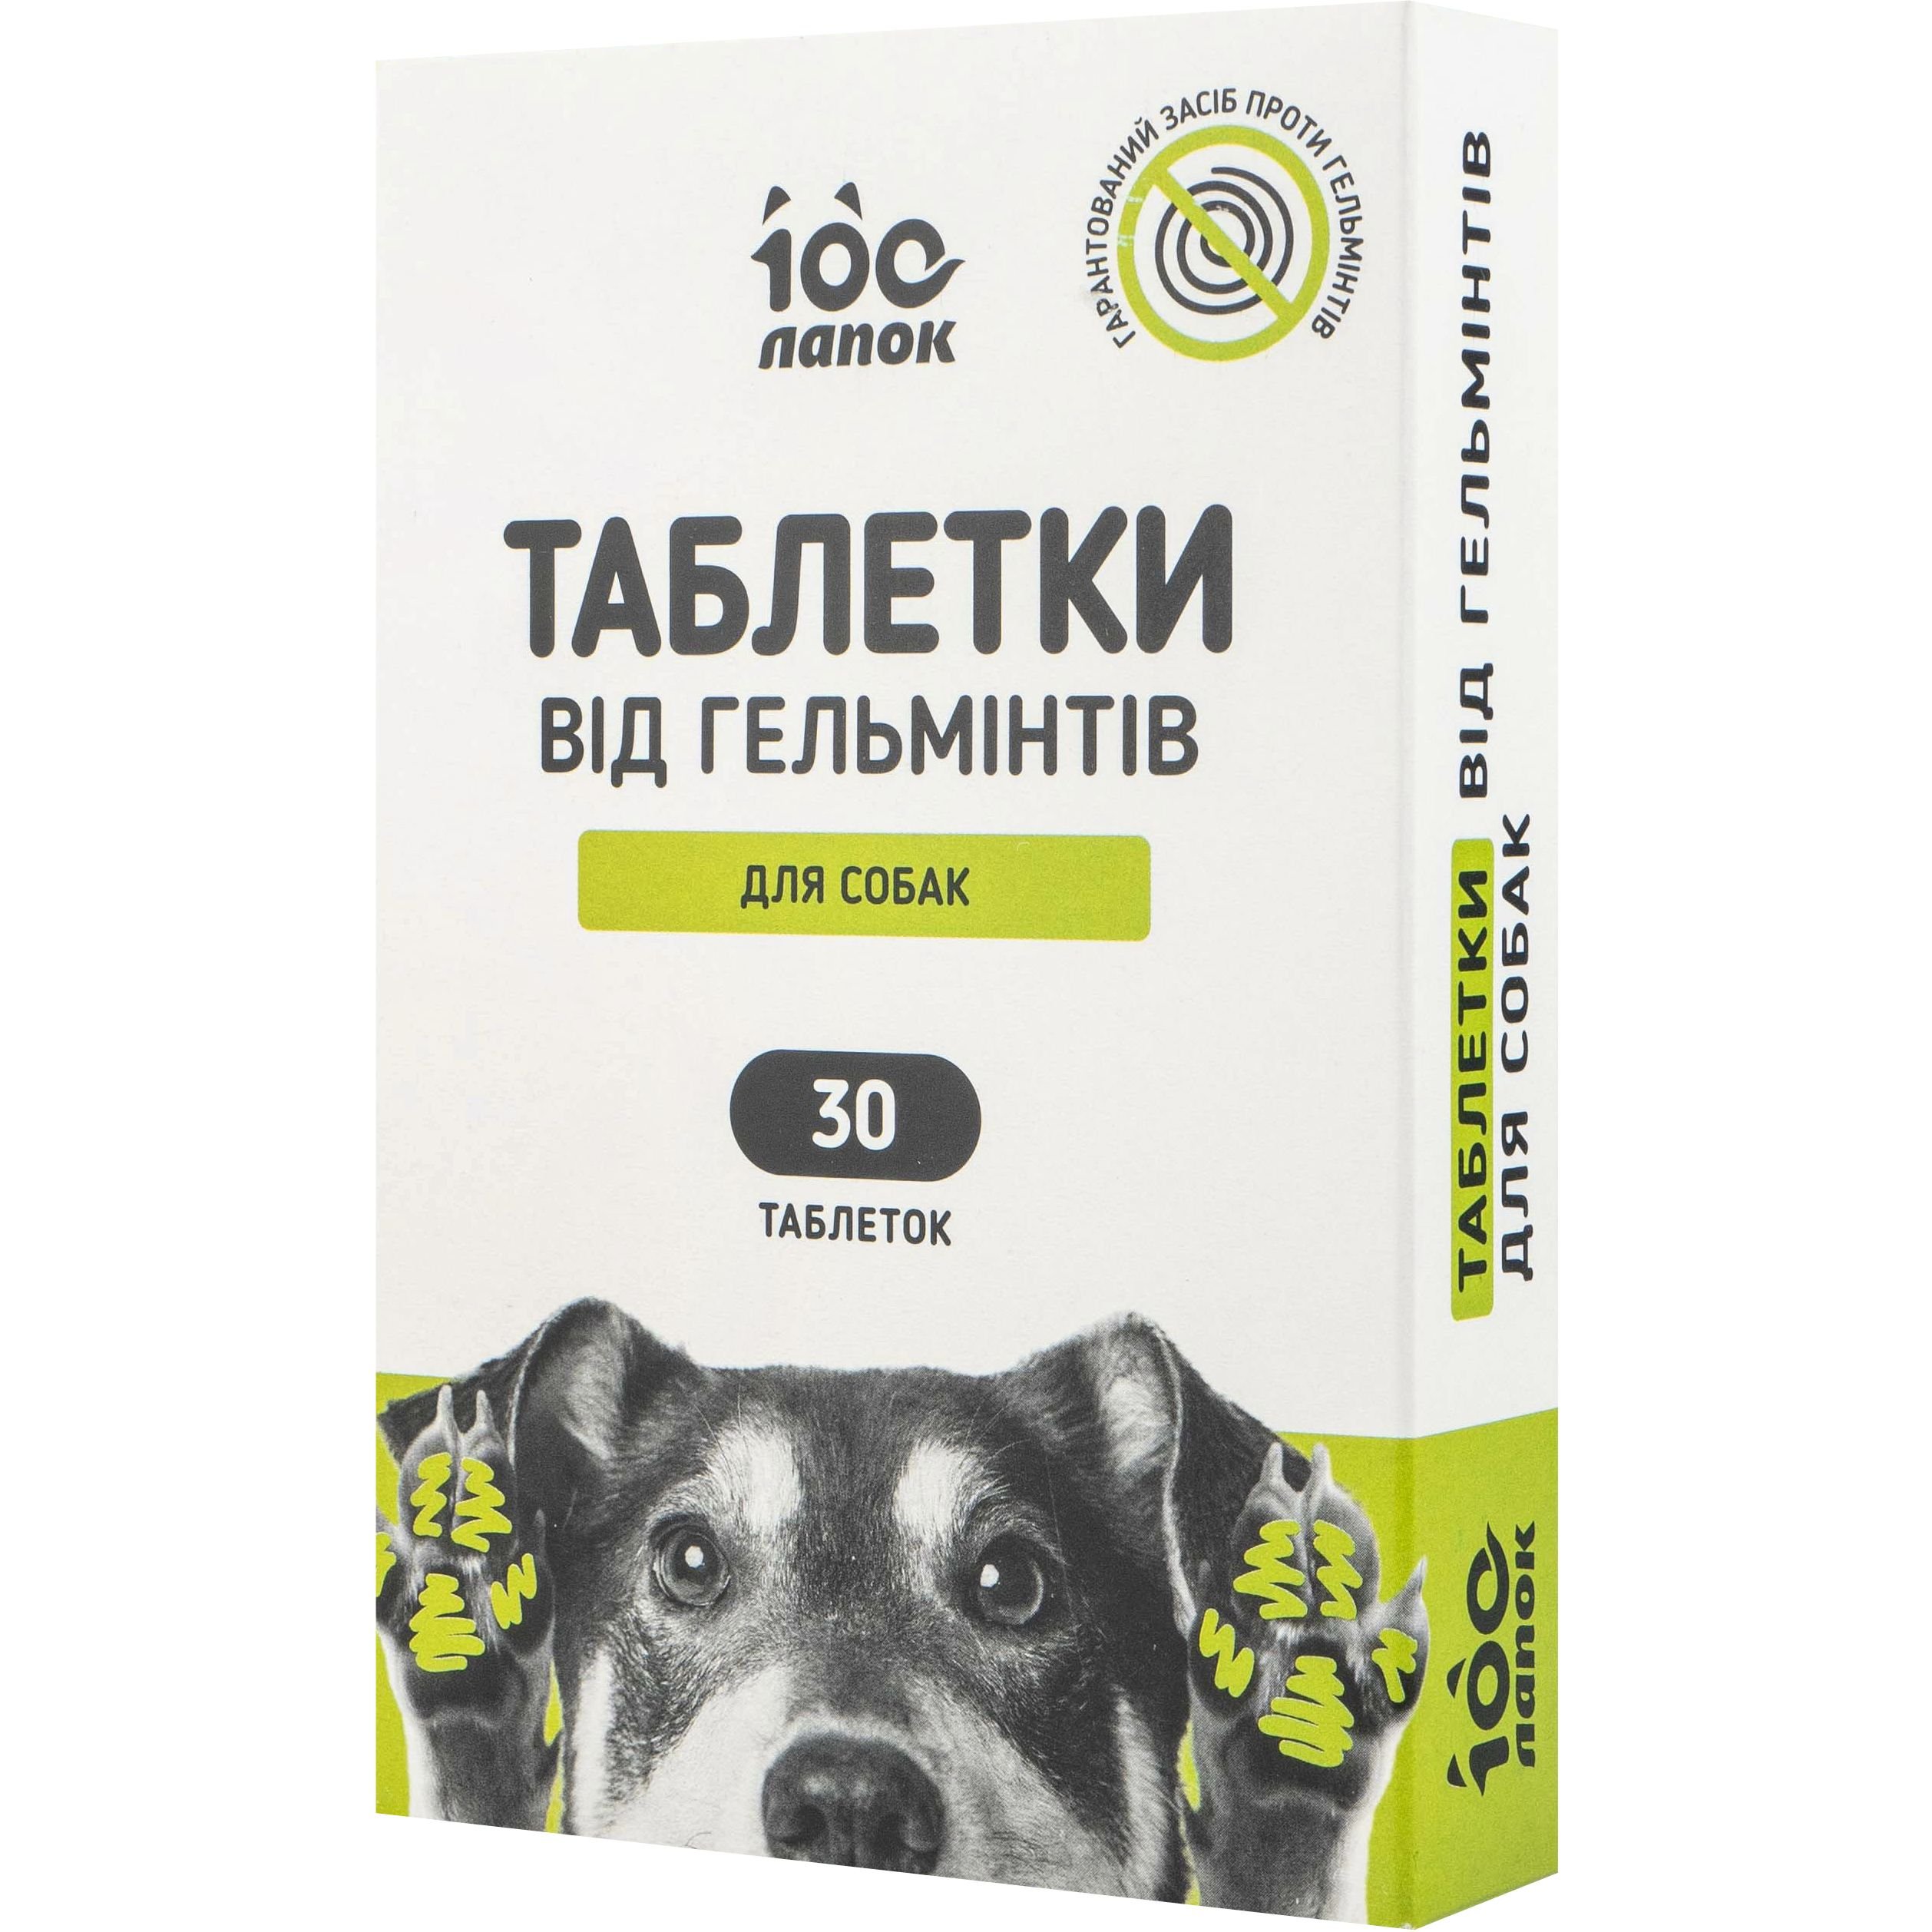 Антигельминтные таблетки Vitomax 100 Лапок для собак, 30 таблеток - фото 1